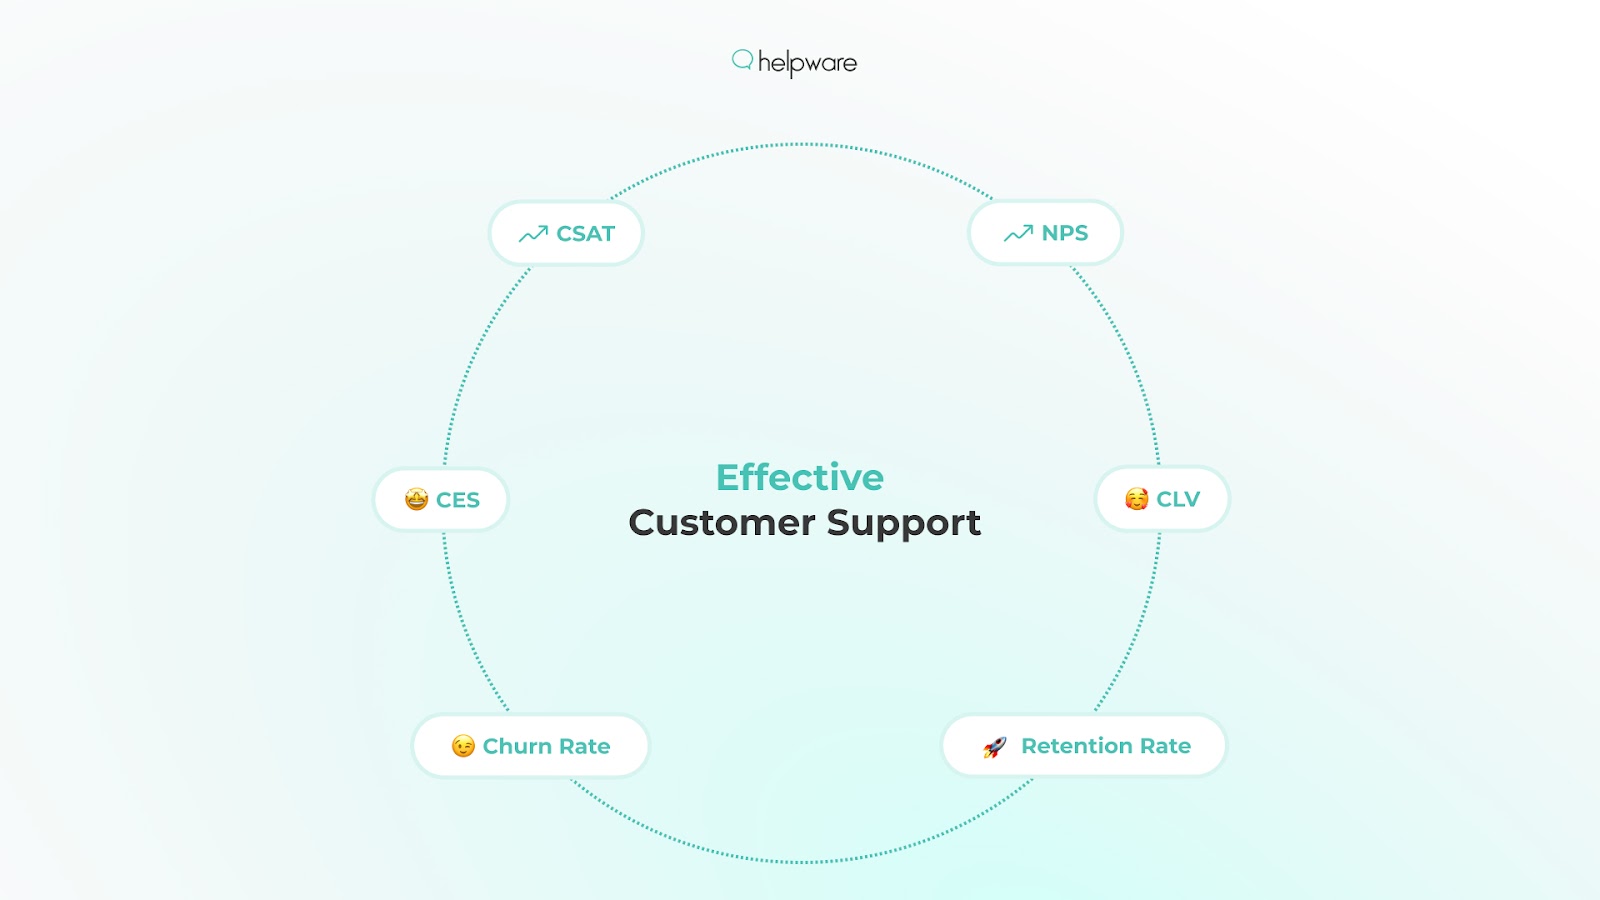 Impact of effective customer support on key metrics